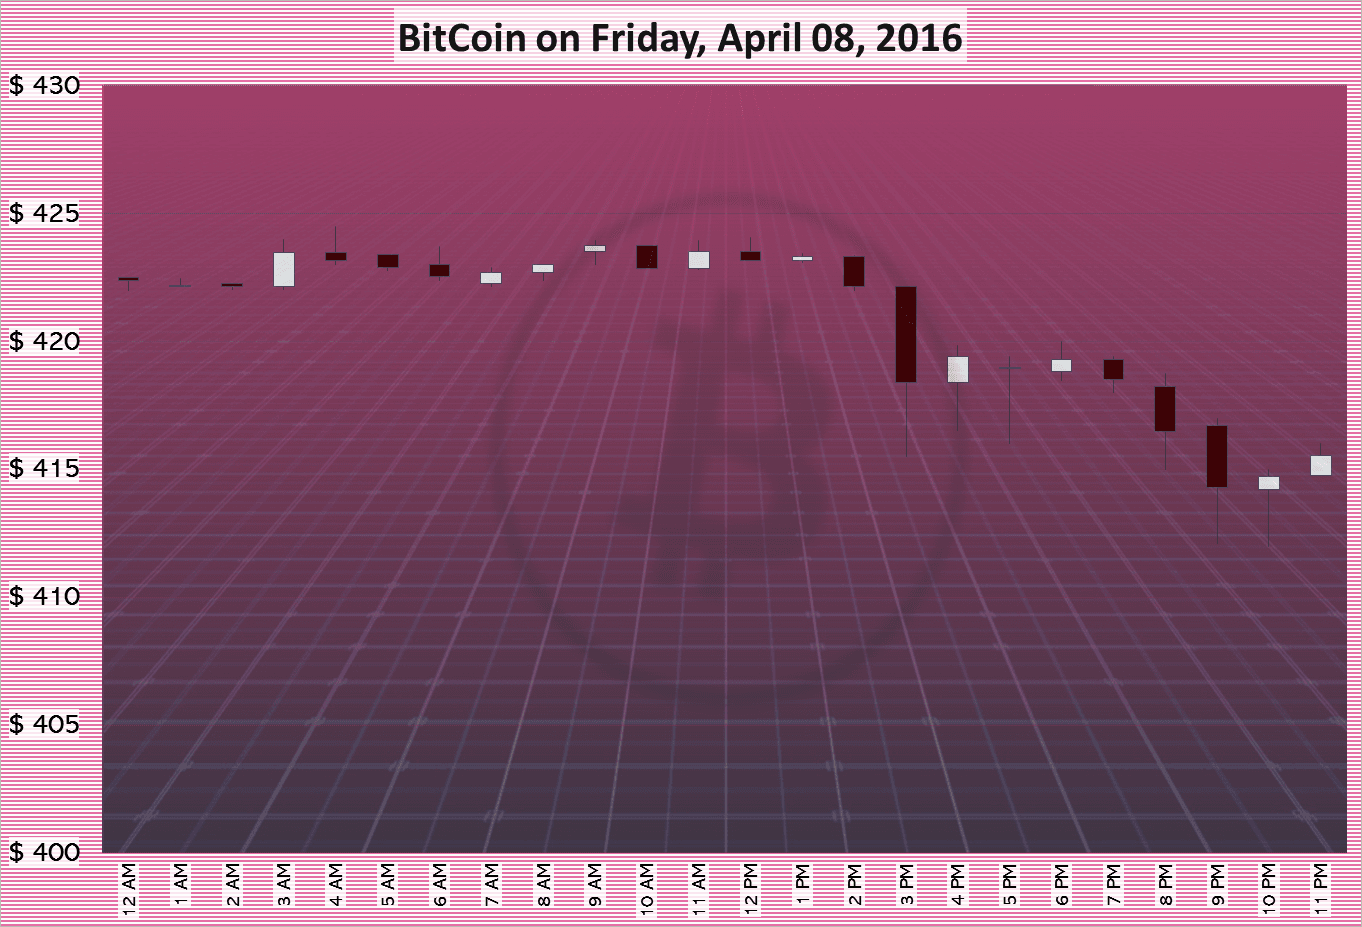 BitCoin on Friday, April 08, 2016